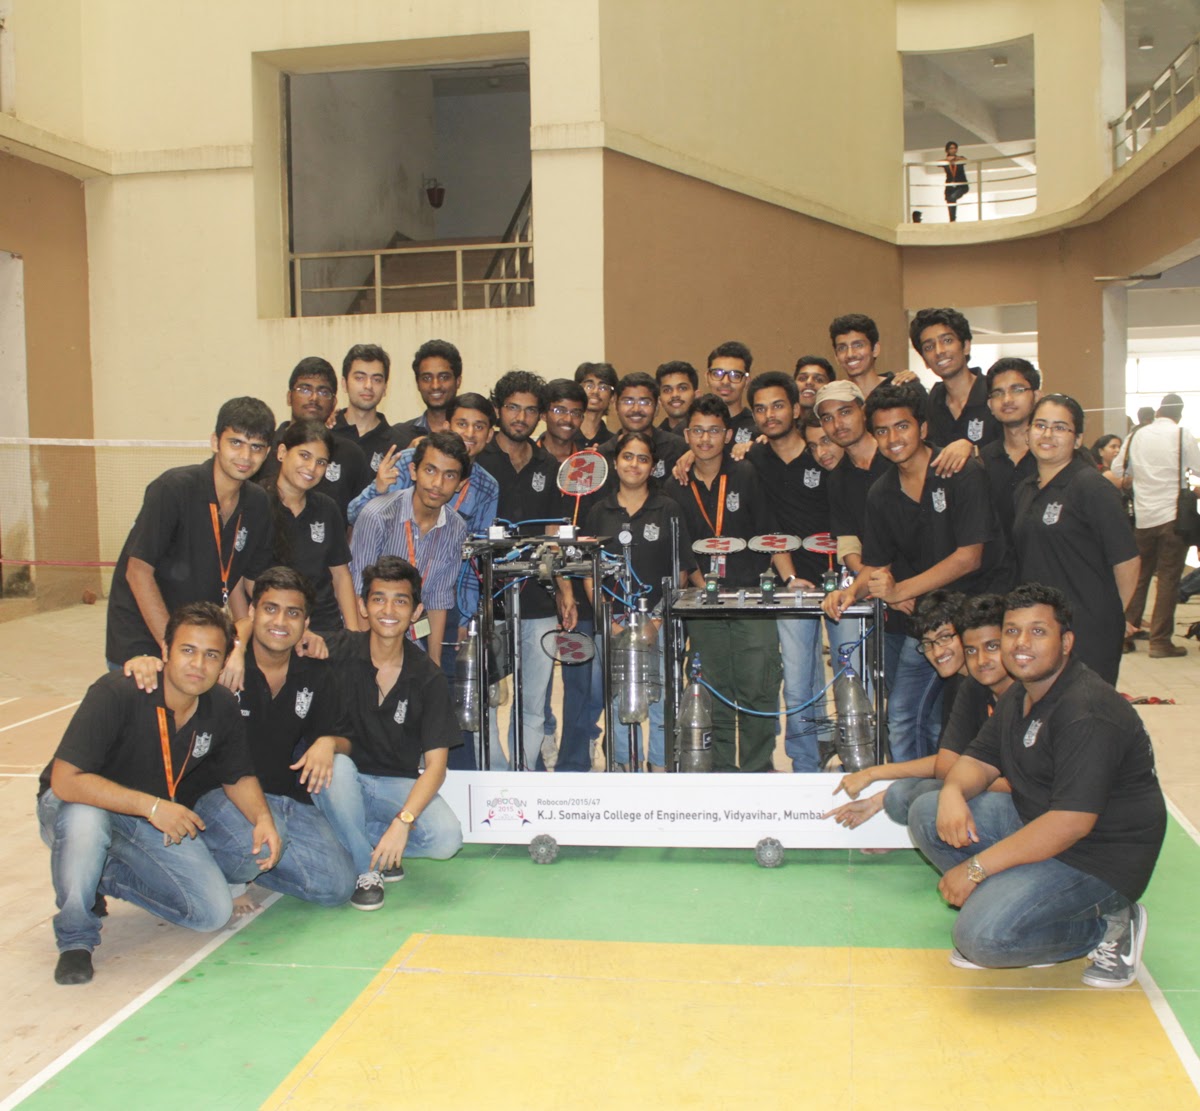 The Somaiya School as the engineering students of K.J.Somaiya College of Engineering; Vidyavihar demonstrated their creation robots playing badminton